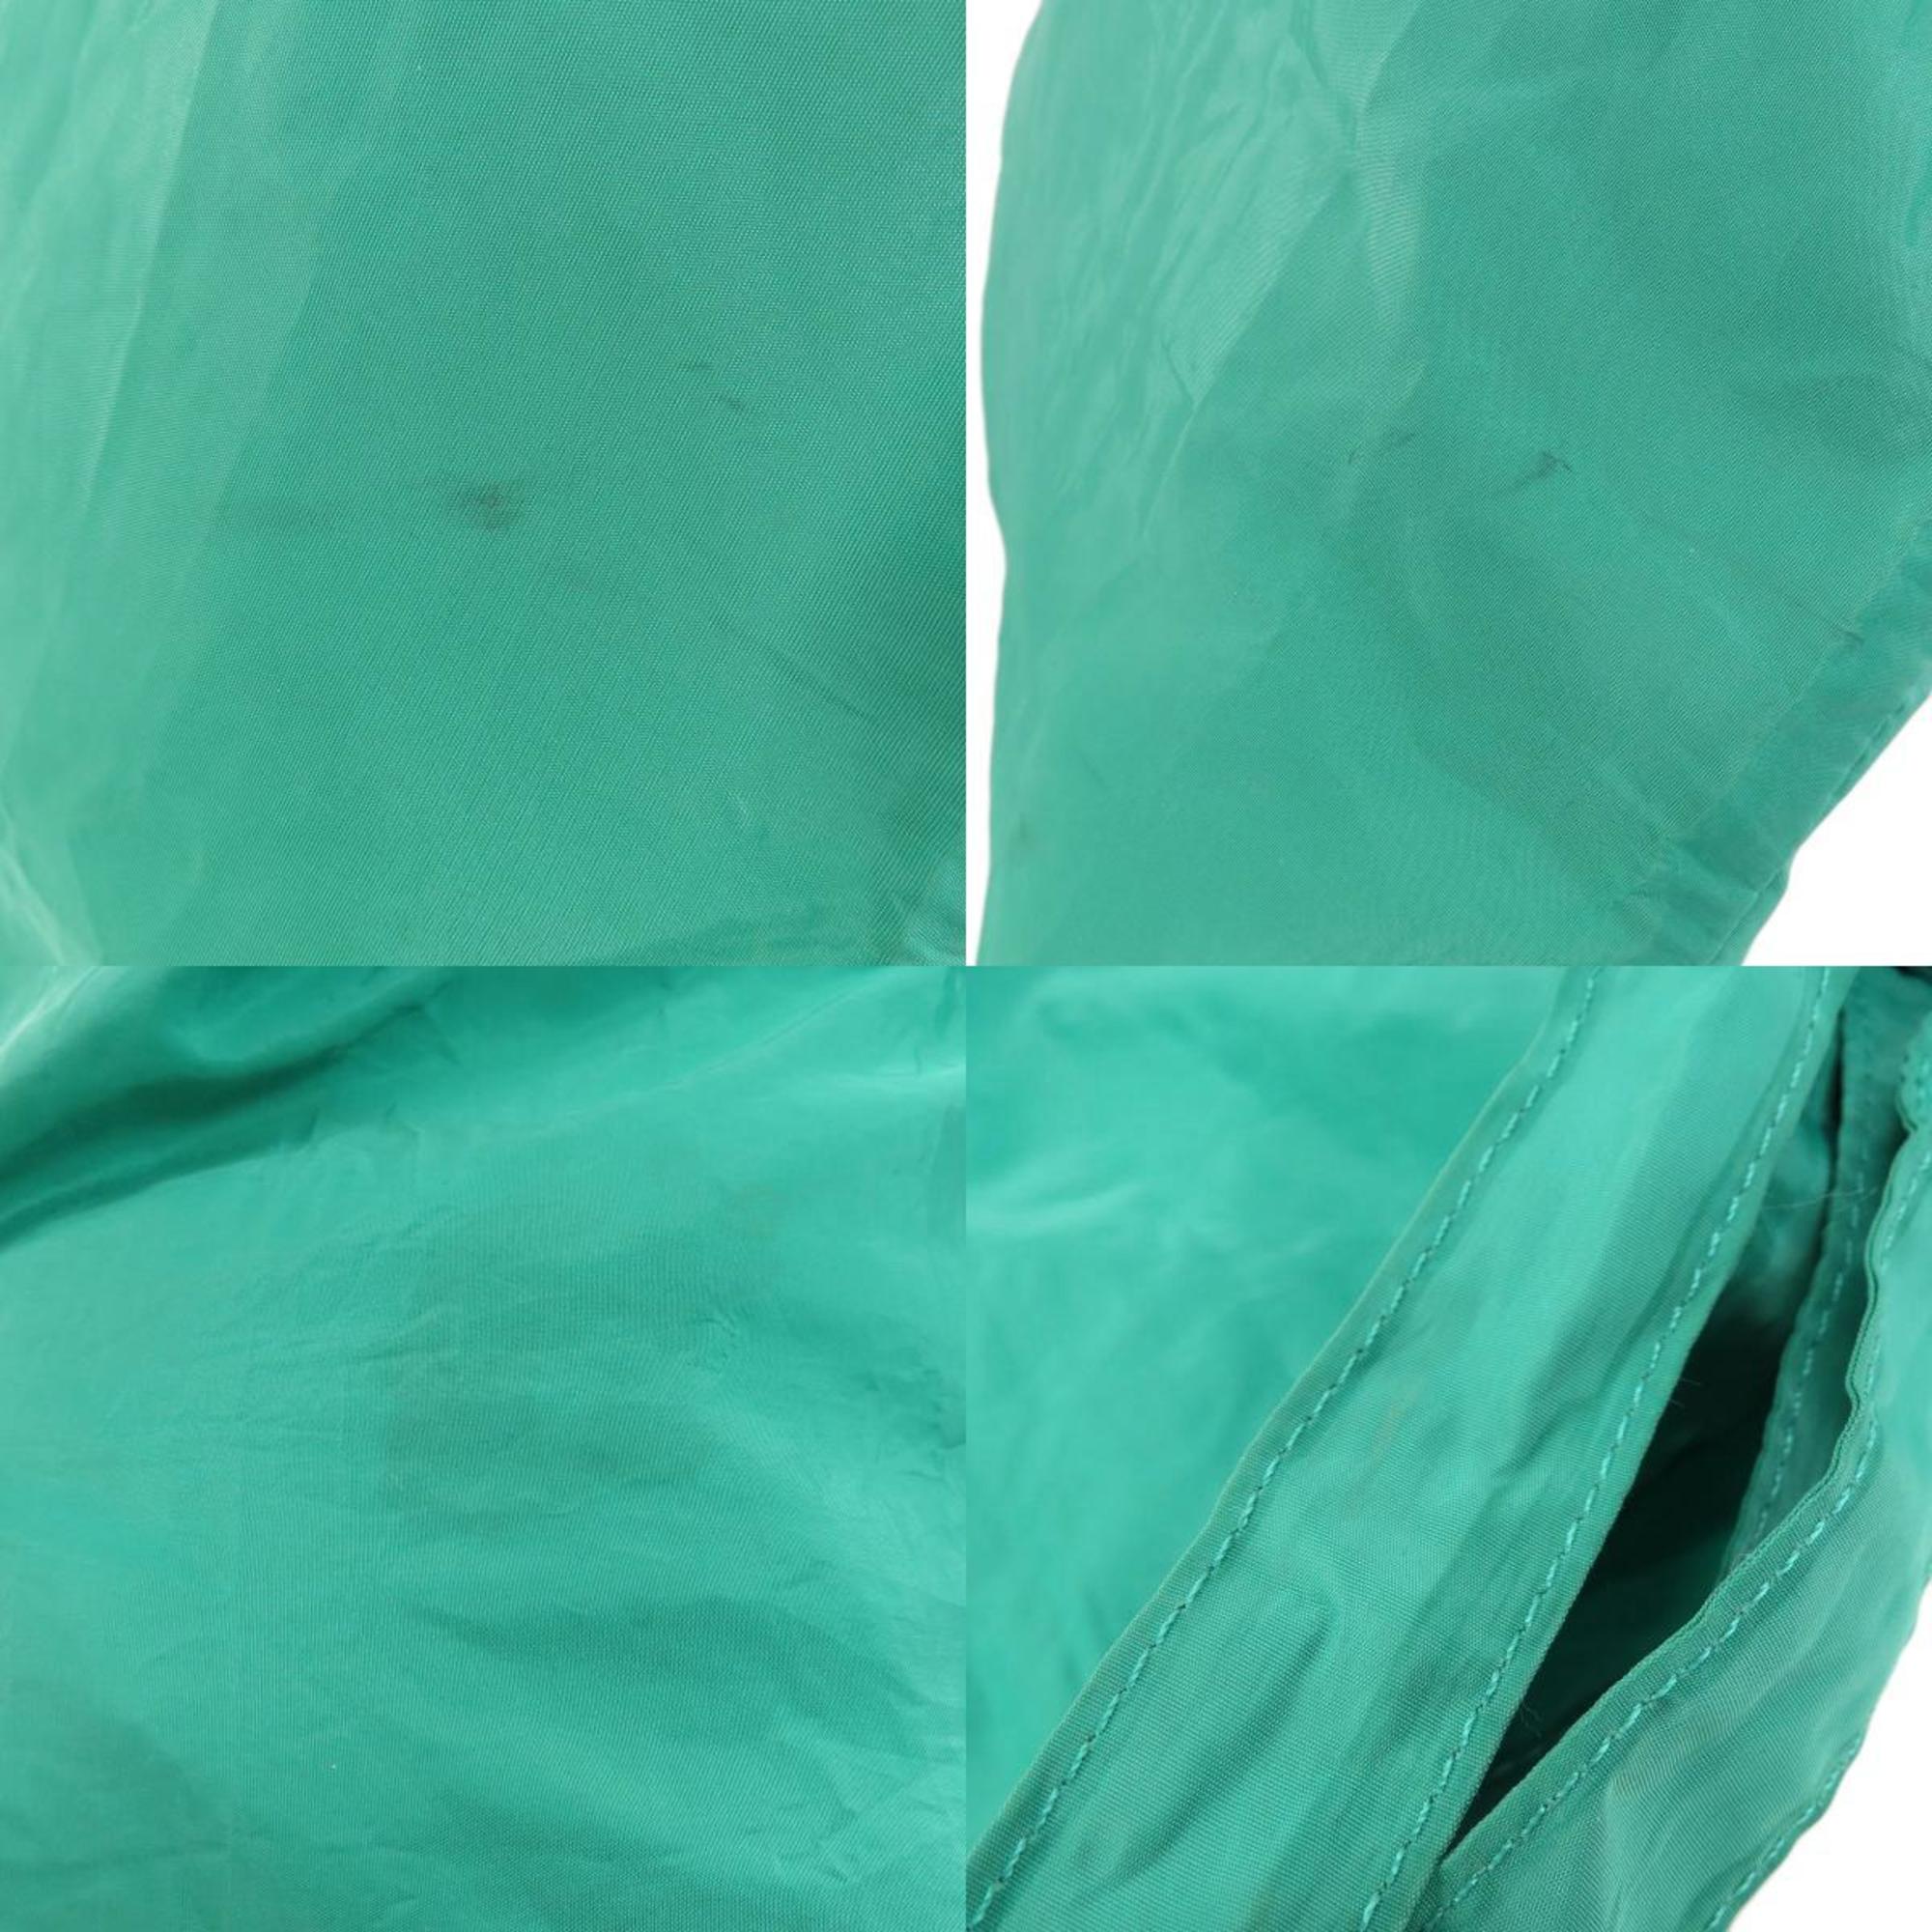 Anya Hindmarch Fish Motif Eco Bag Tote Nylon Material Women's